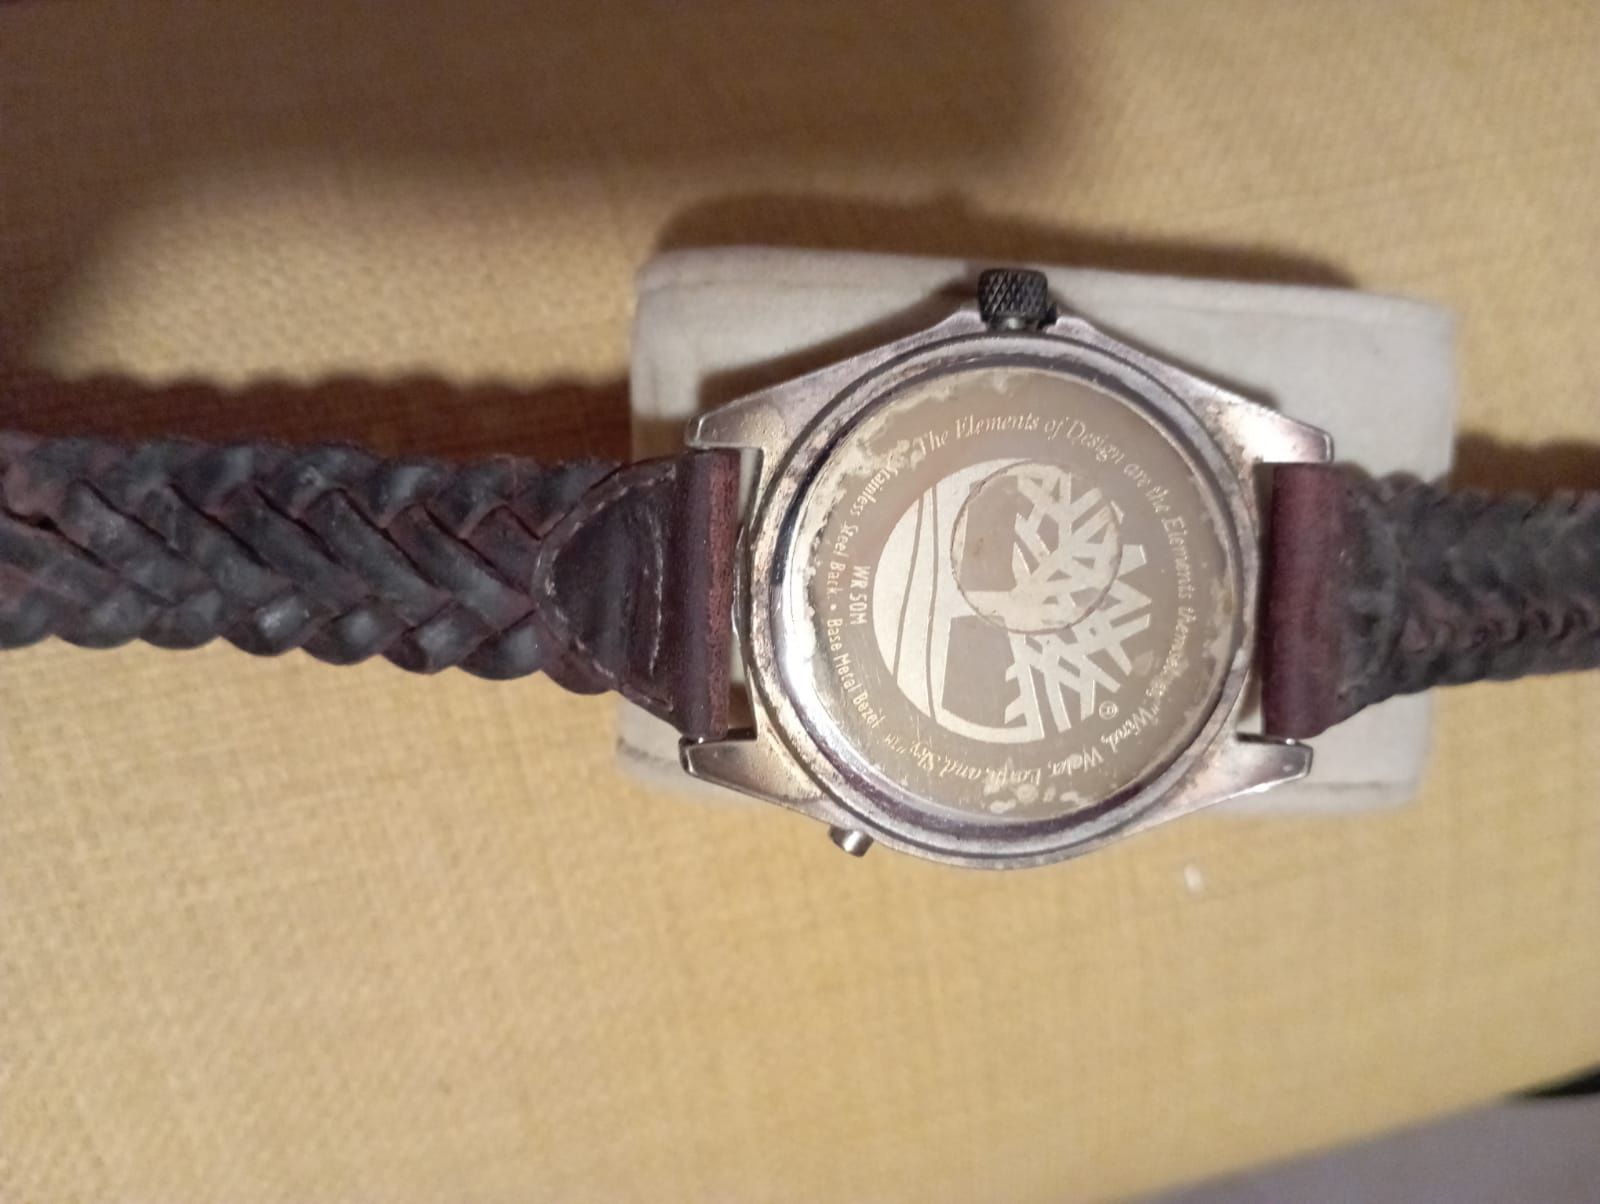 Relógio Timberland bracelete em pele